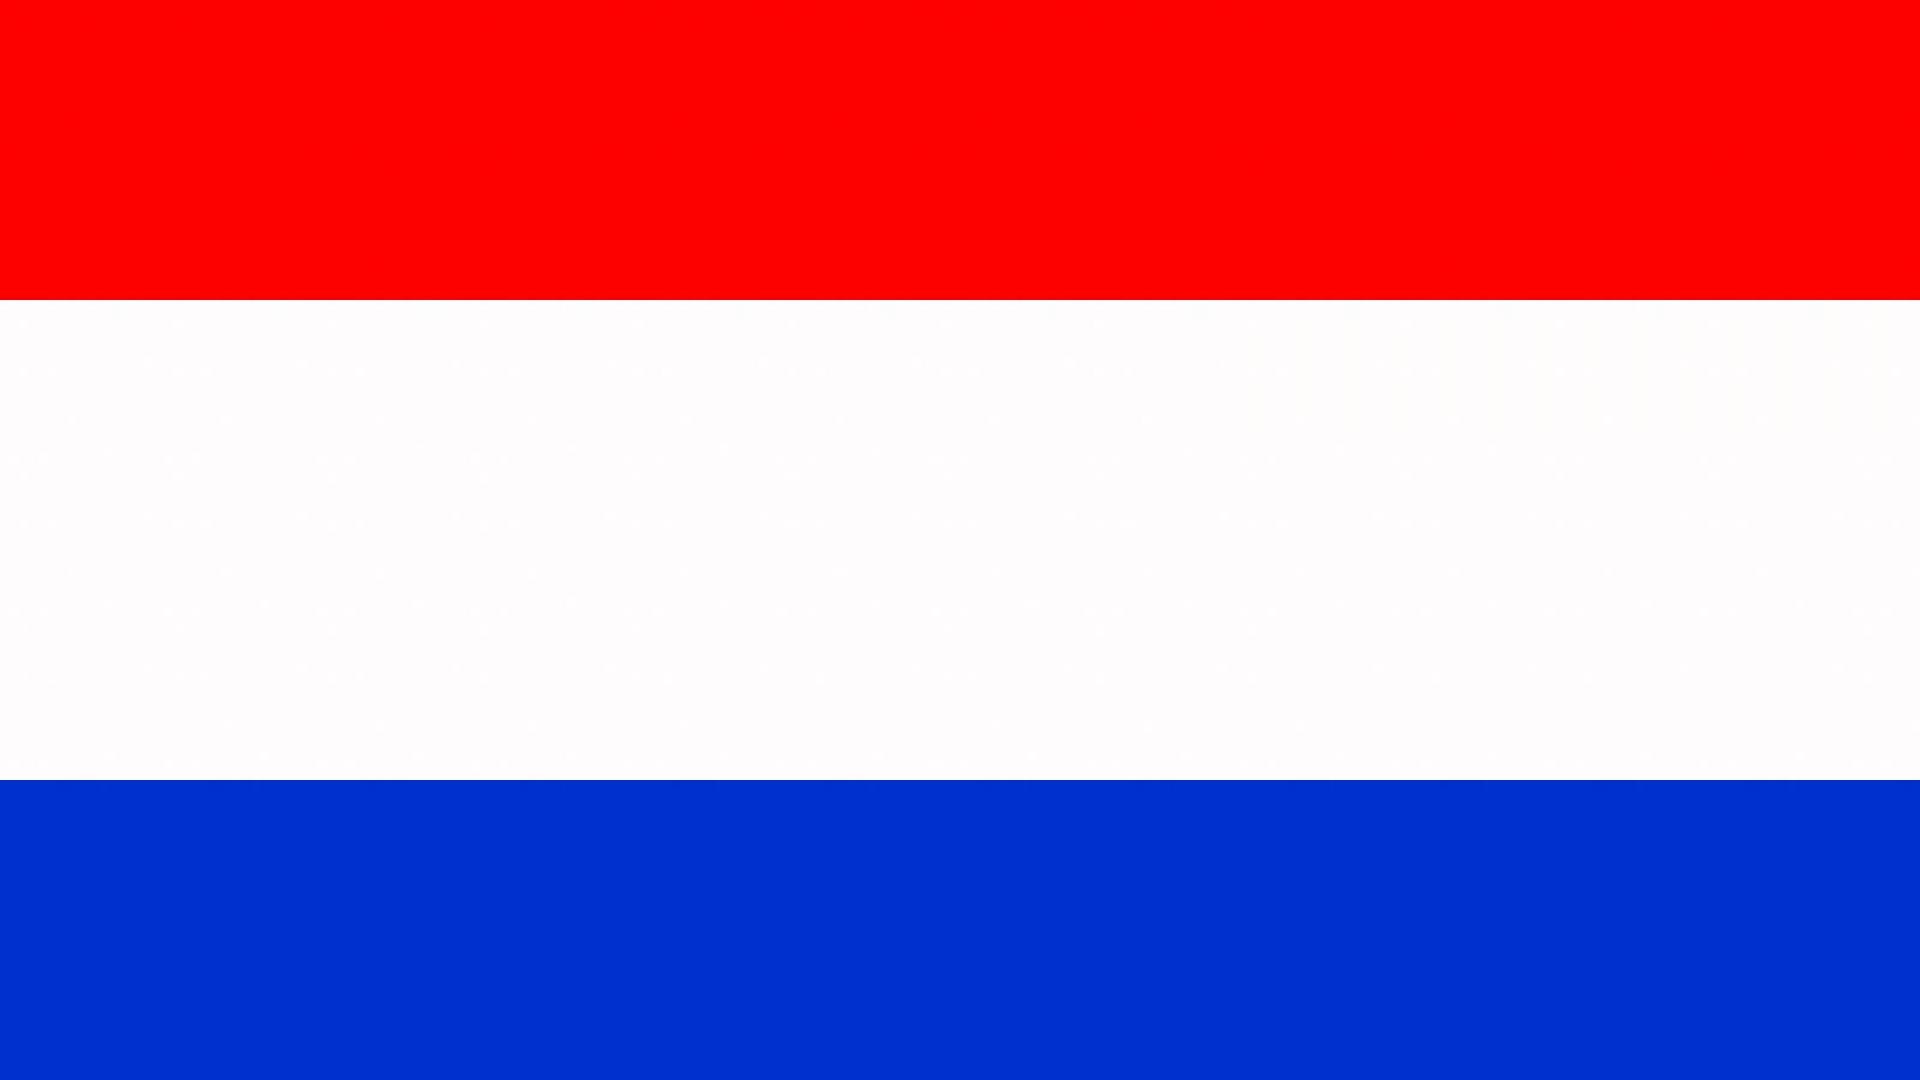 Netherlands Flag, High Definition, High Quality, Widescreen